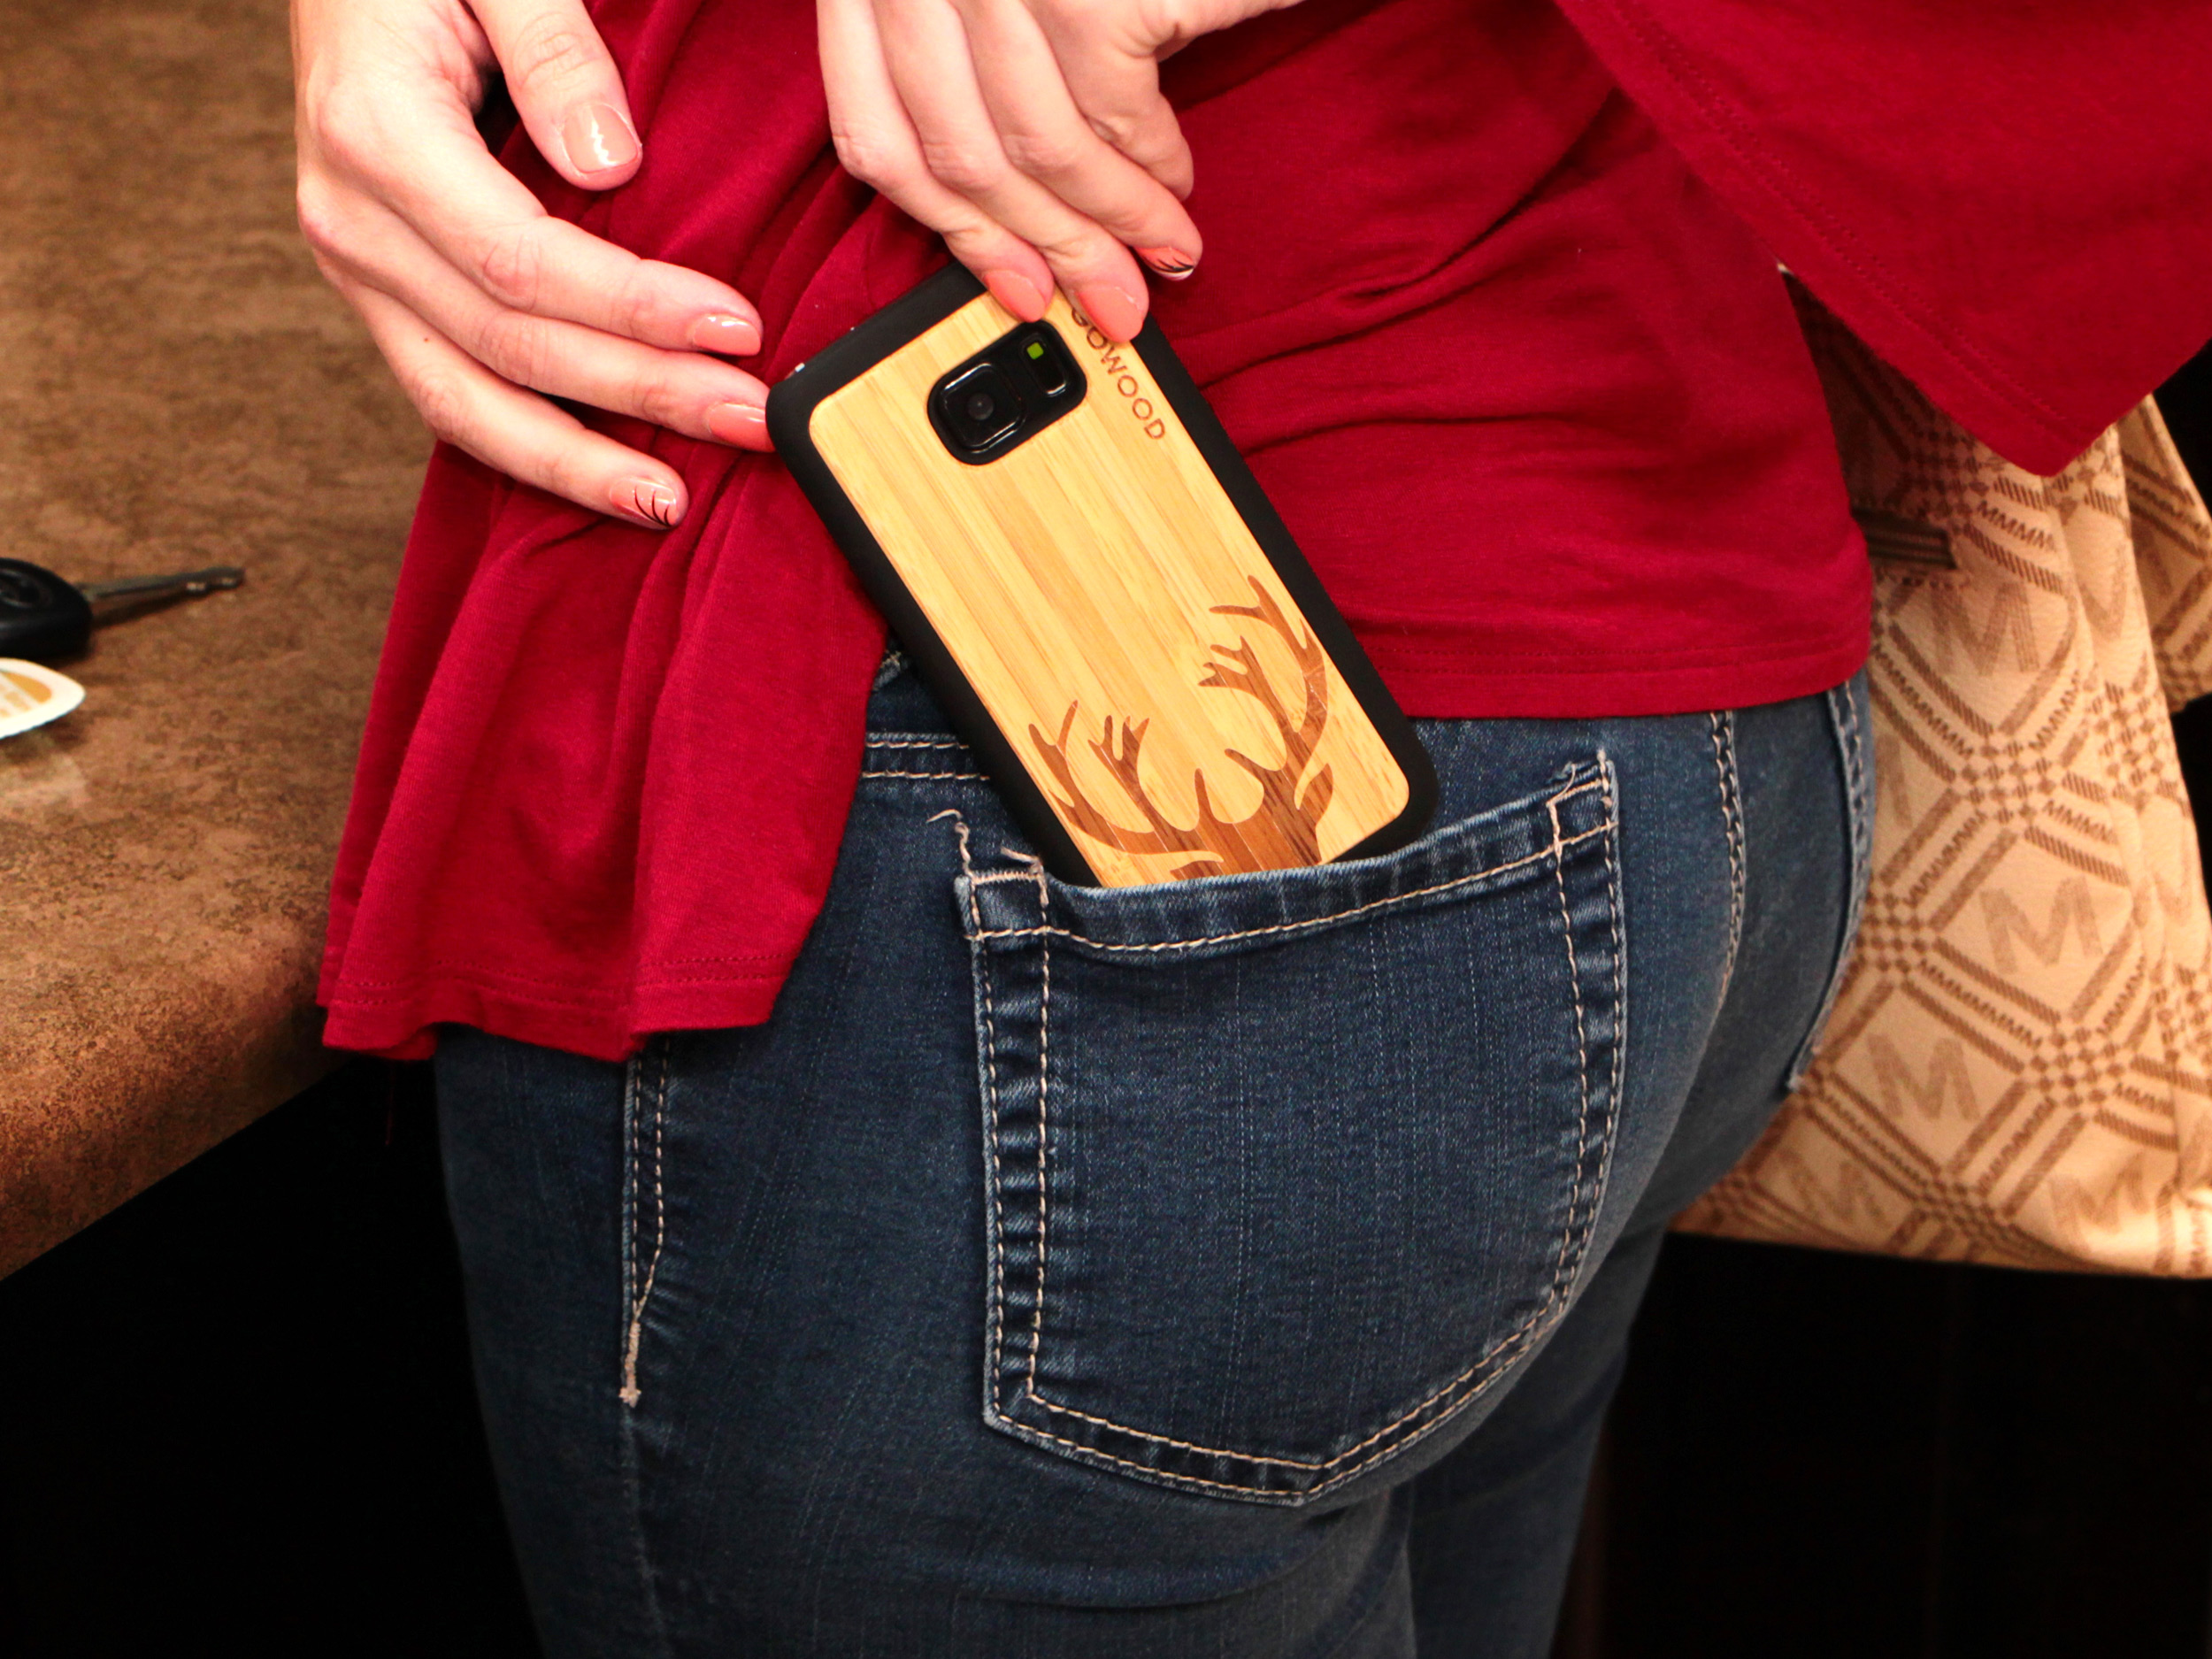 Samsung Galaxy S8 wood case